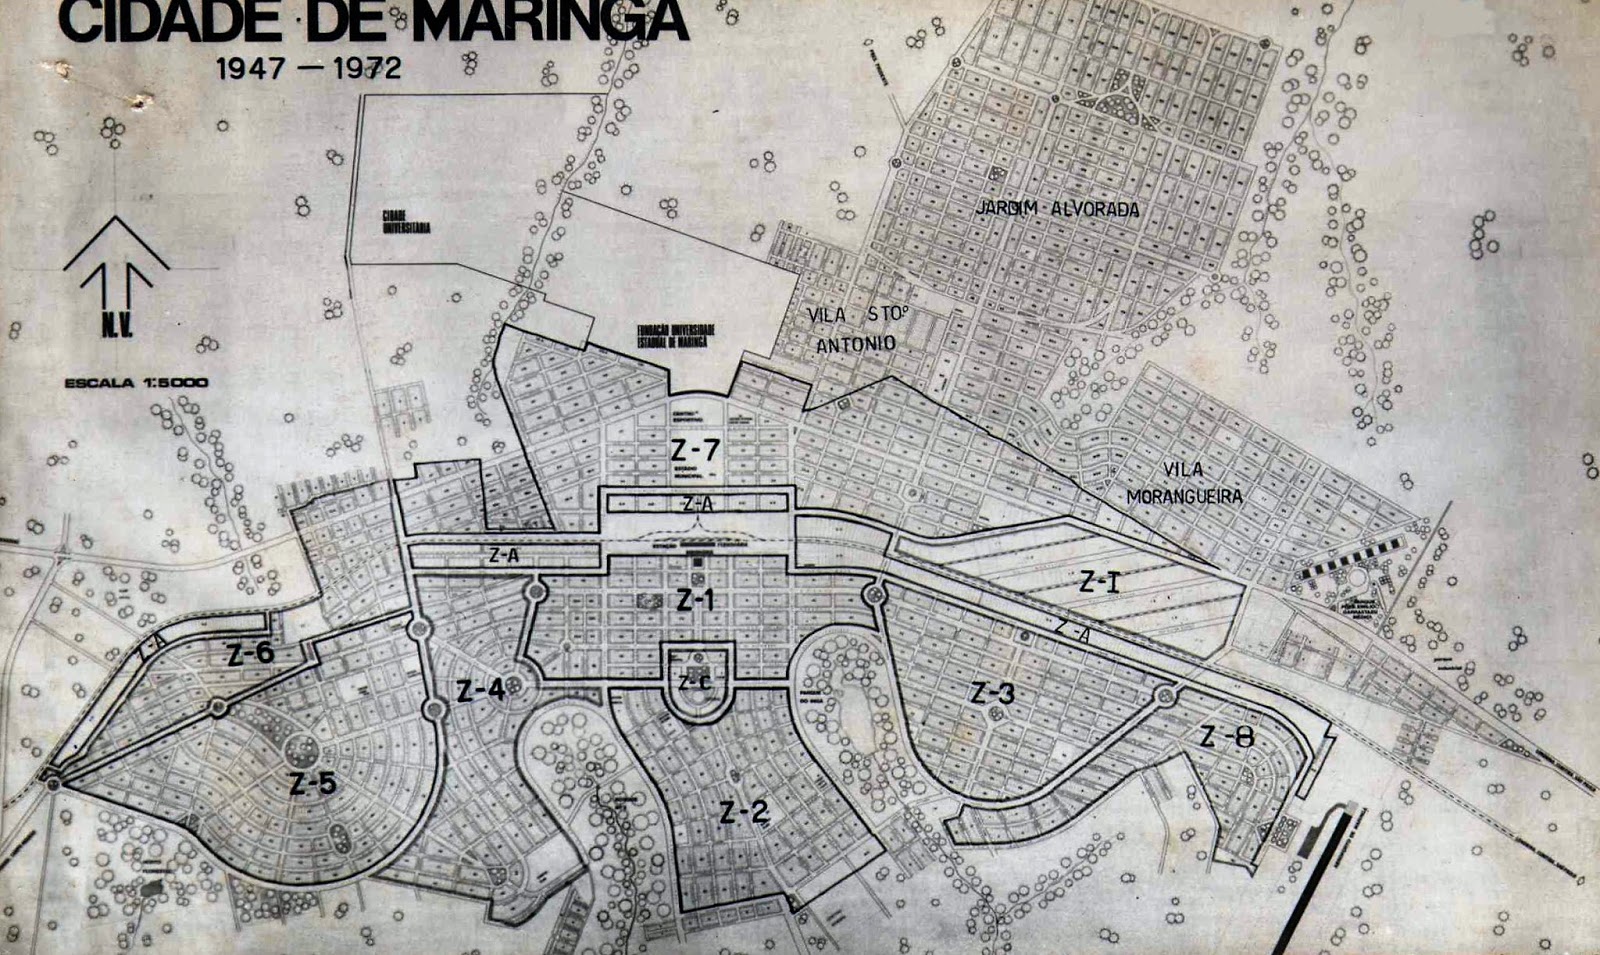 Mapa de Maringá - 1972